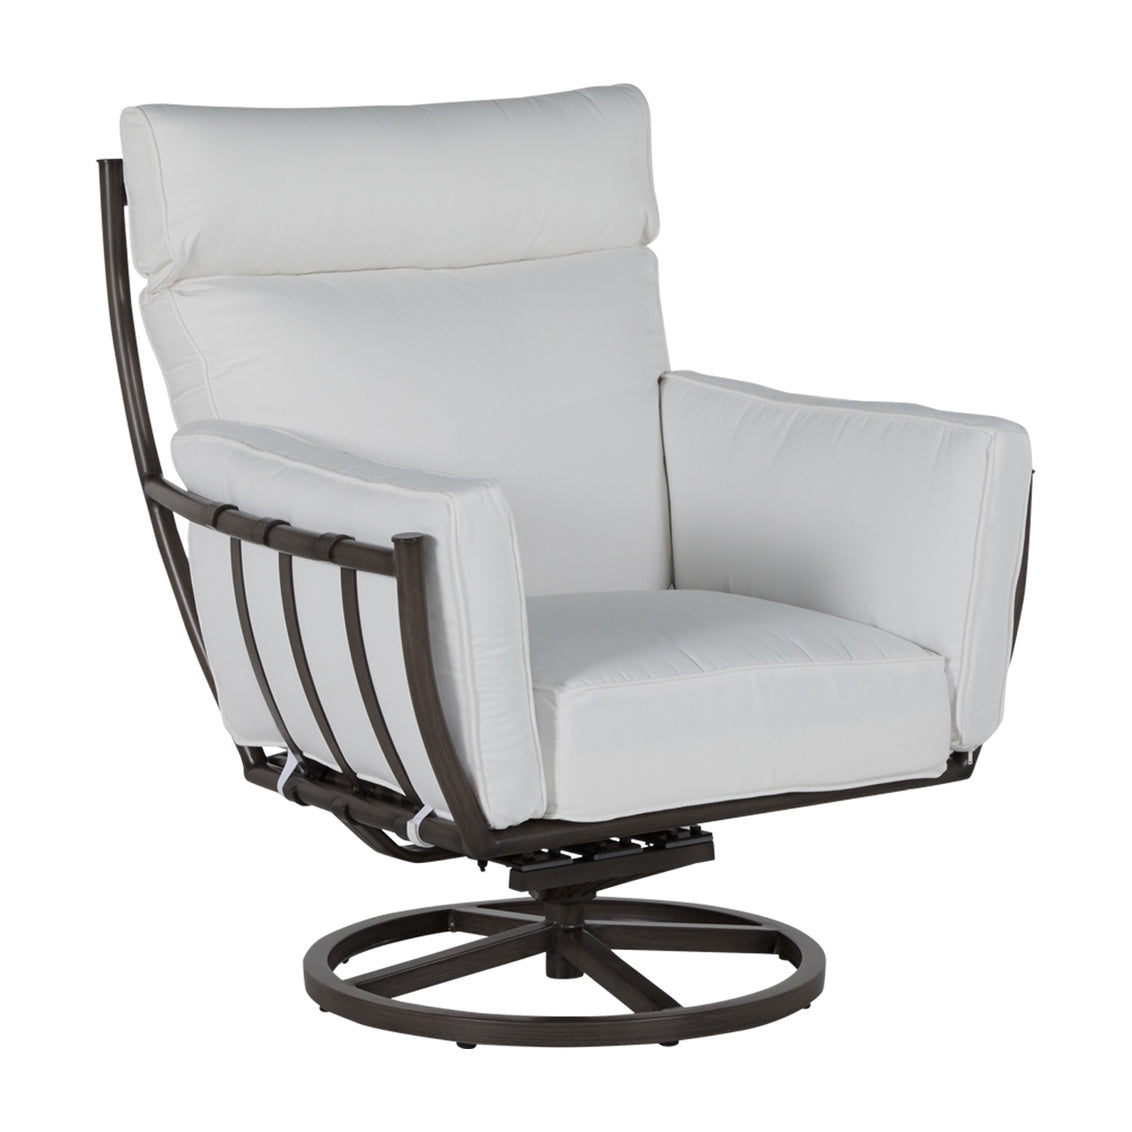 Majorca Aluminum Swivel Rocker Lounge Chair with B Grade Cushion